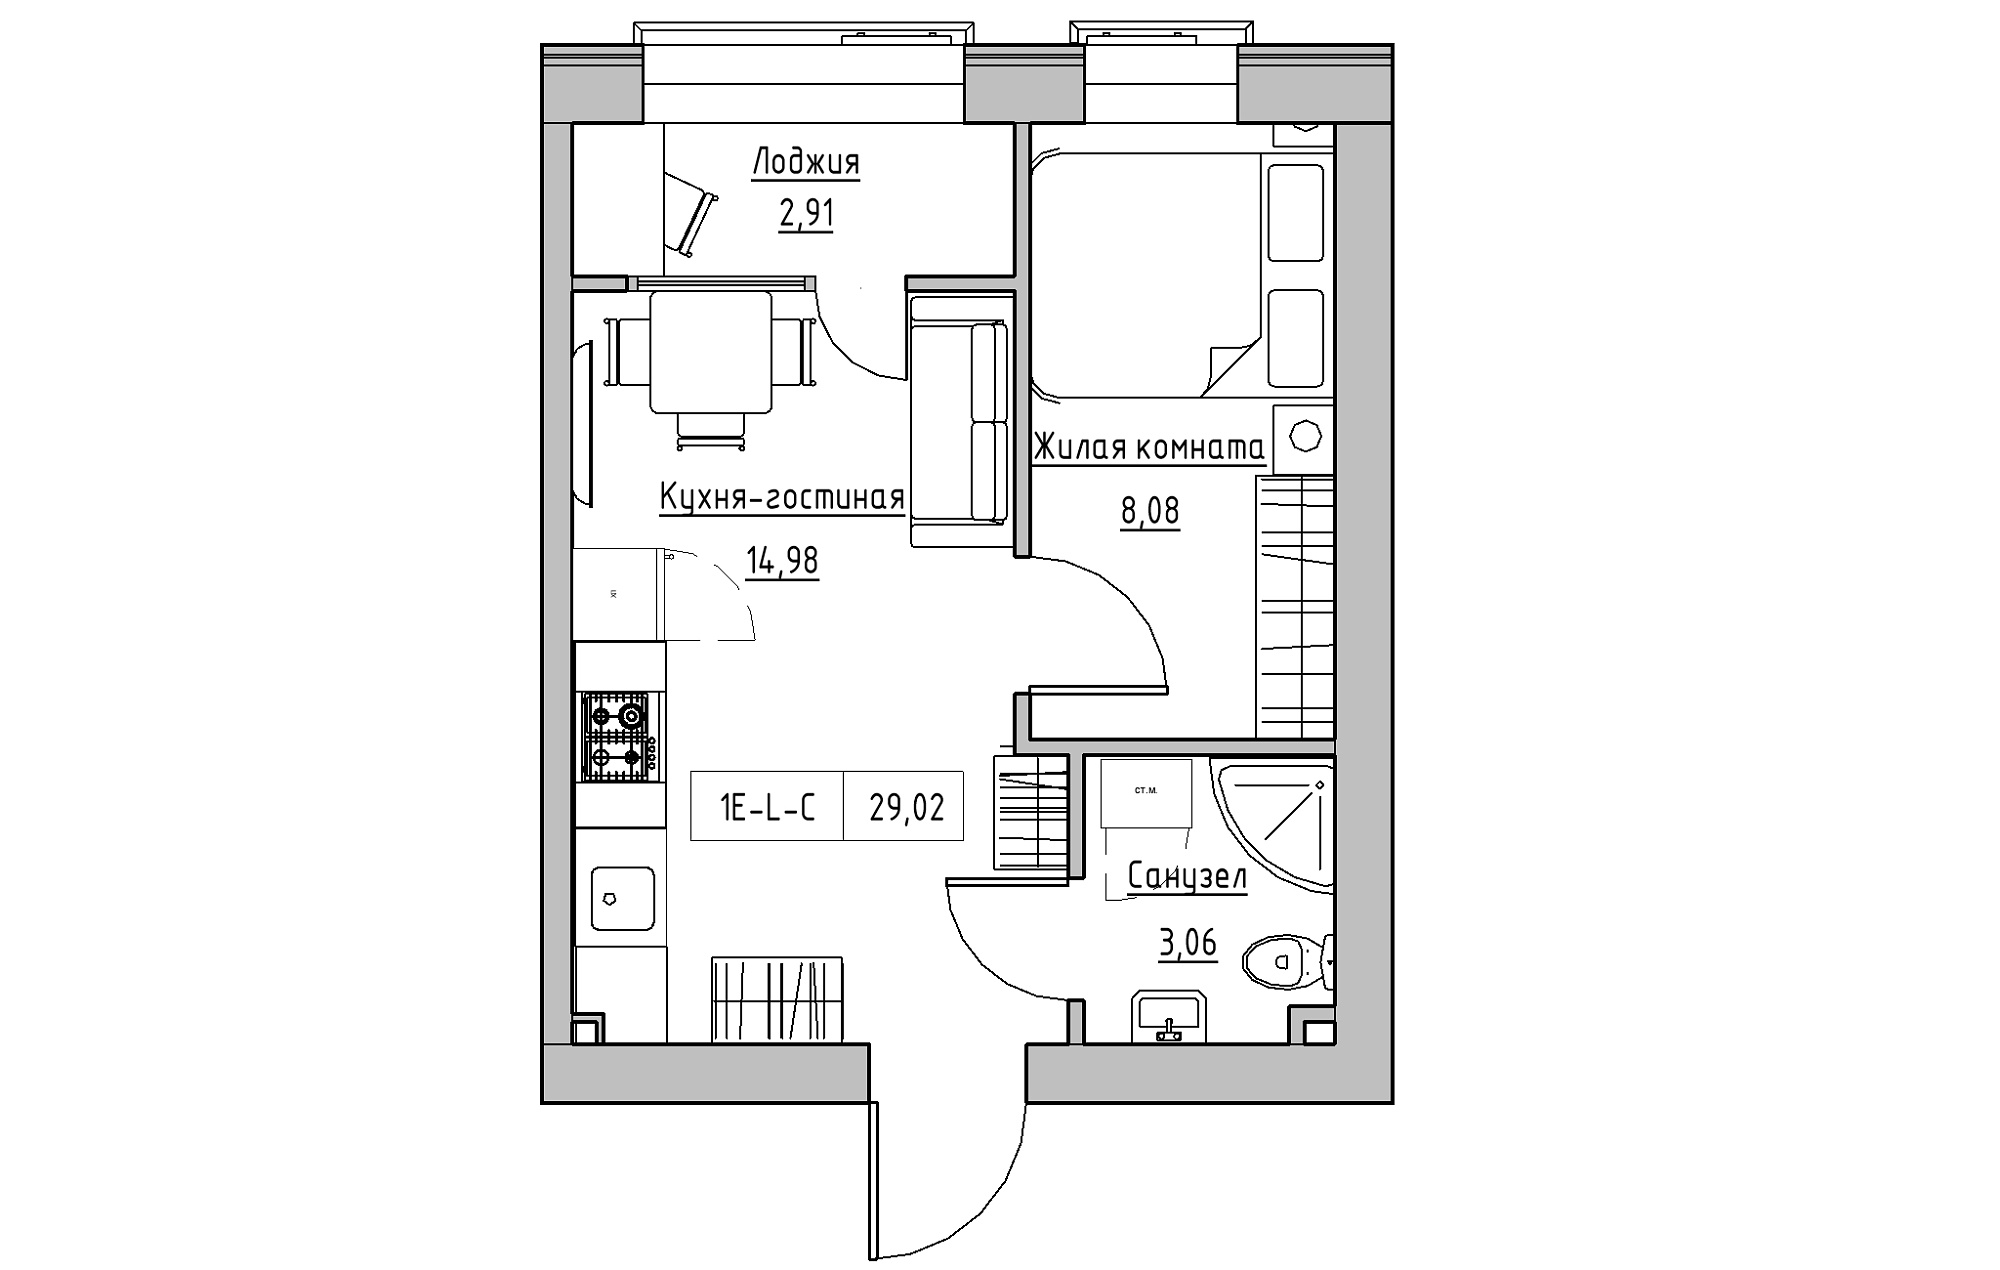 Planning 1-rm flats area 29.02m2, KS-018-04/0007.